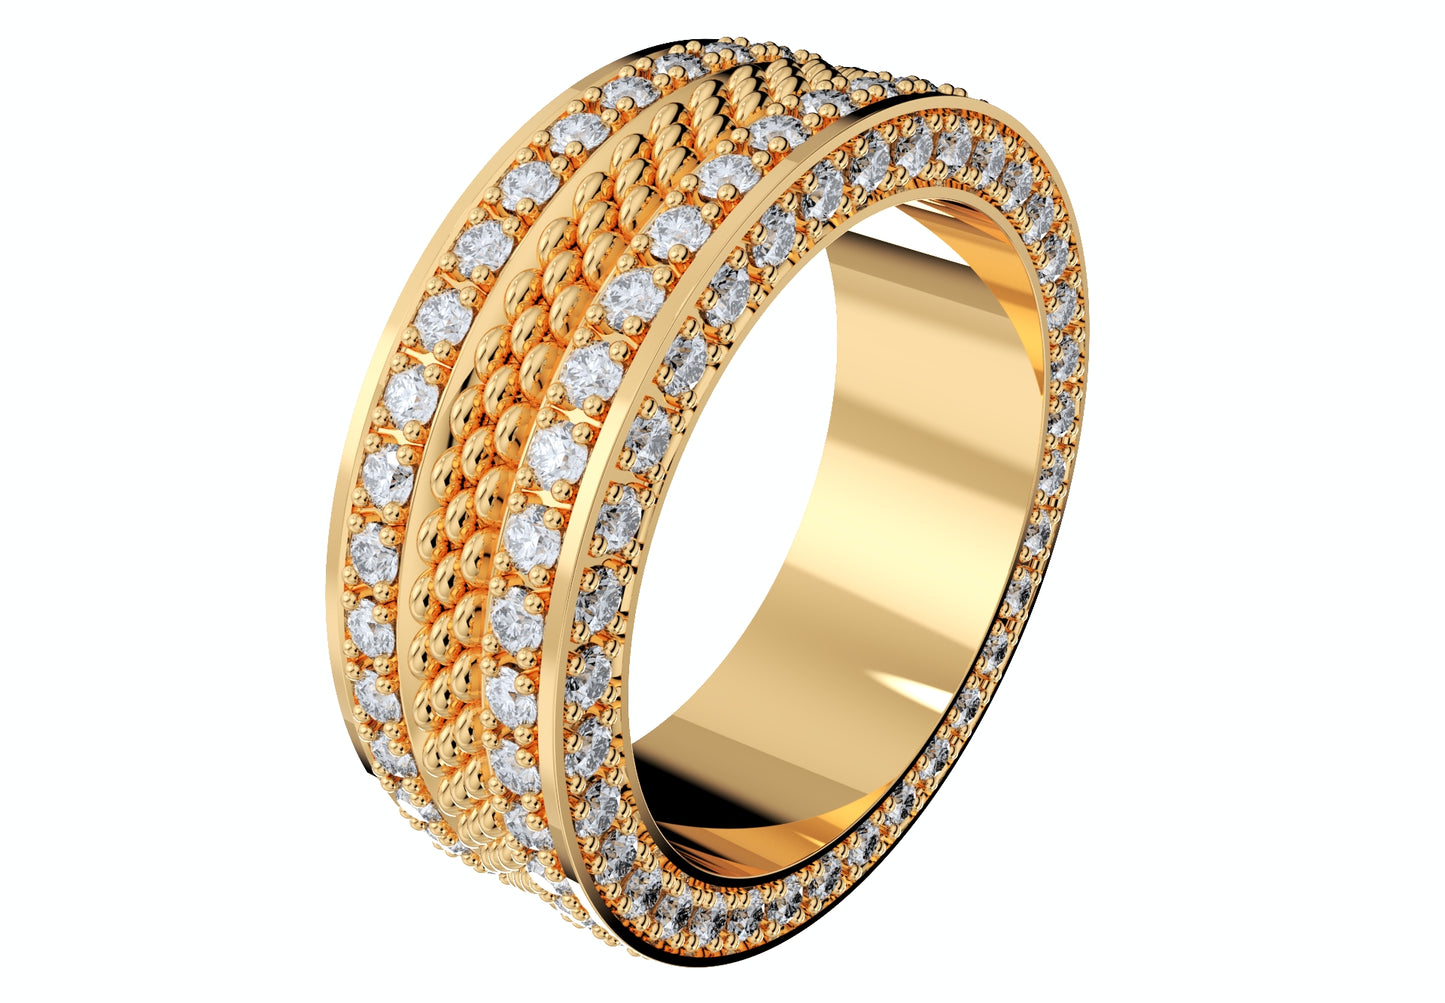 Wedding Ring Set Women Men Ring CAD Design-PSJM001V8